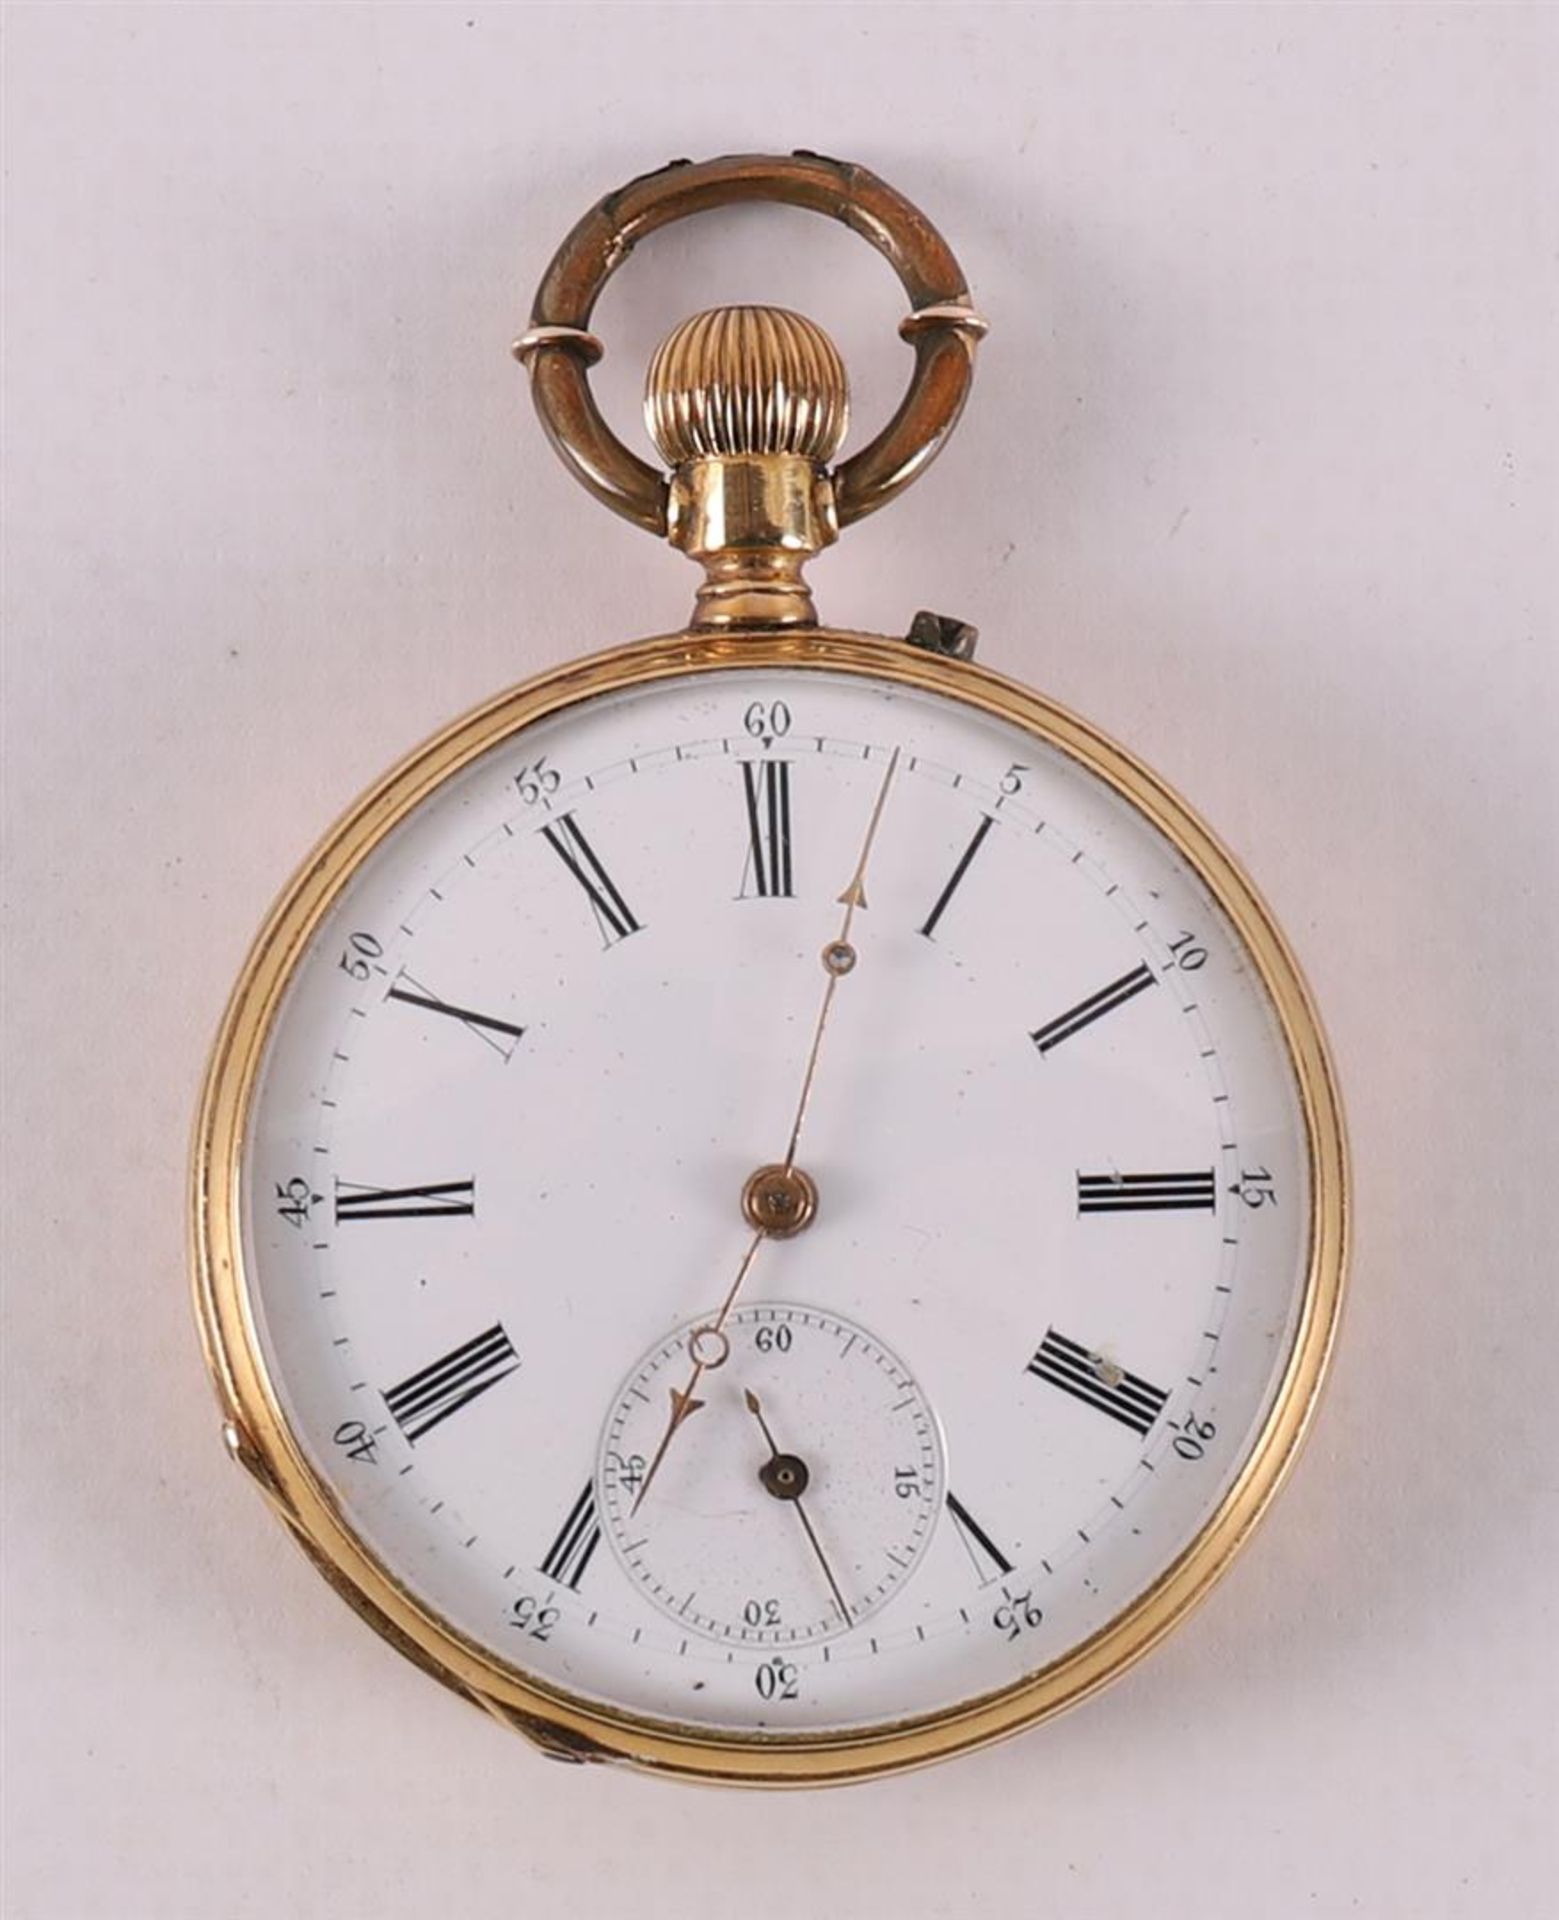 A Remontoir men's vest pocket watch in 18 kt gold case, late 19th century